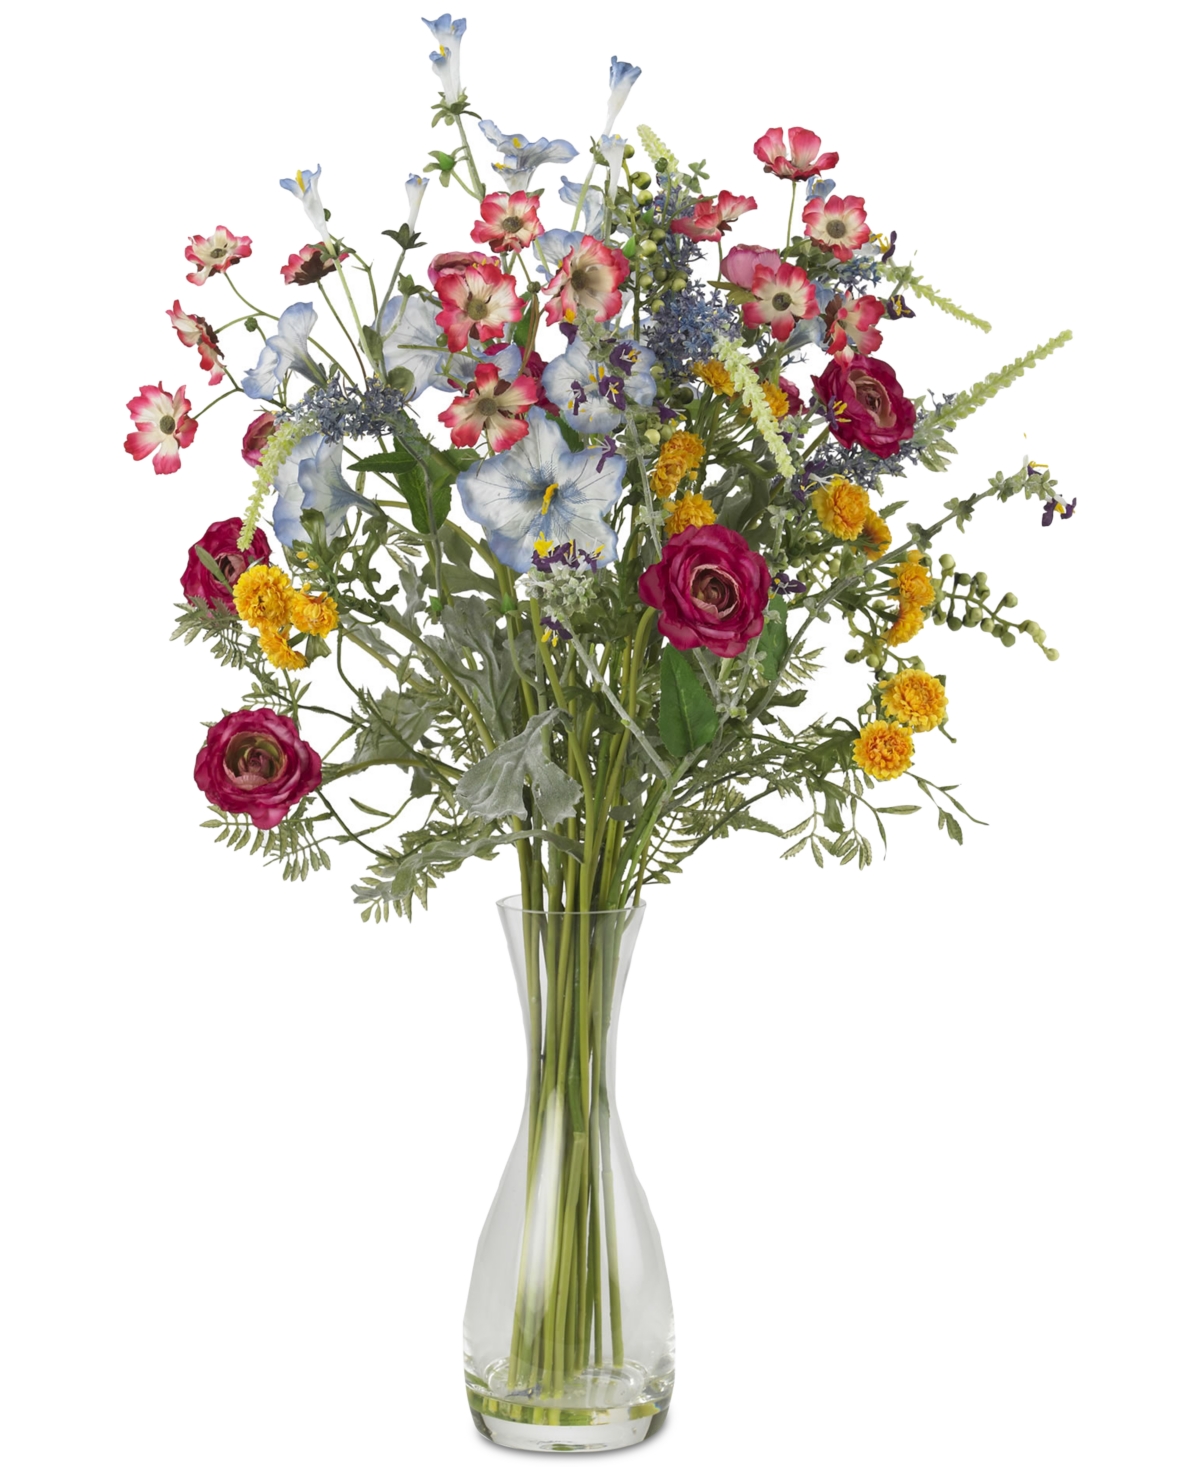 Veranda Garden Artificial Flower Arrangement with Glass Vase - Multi